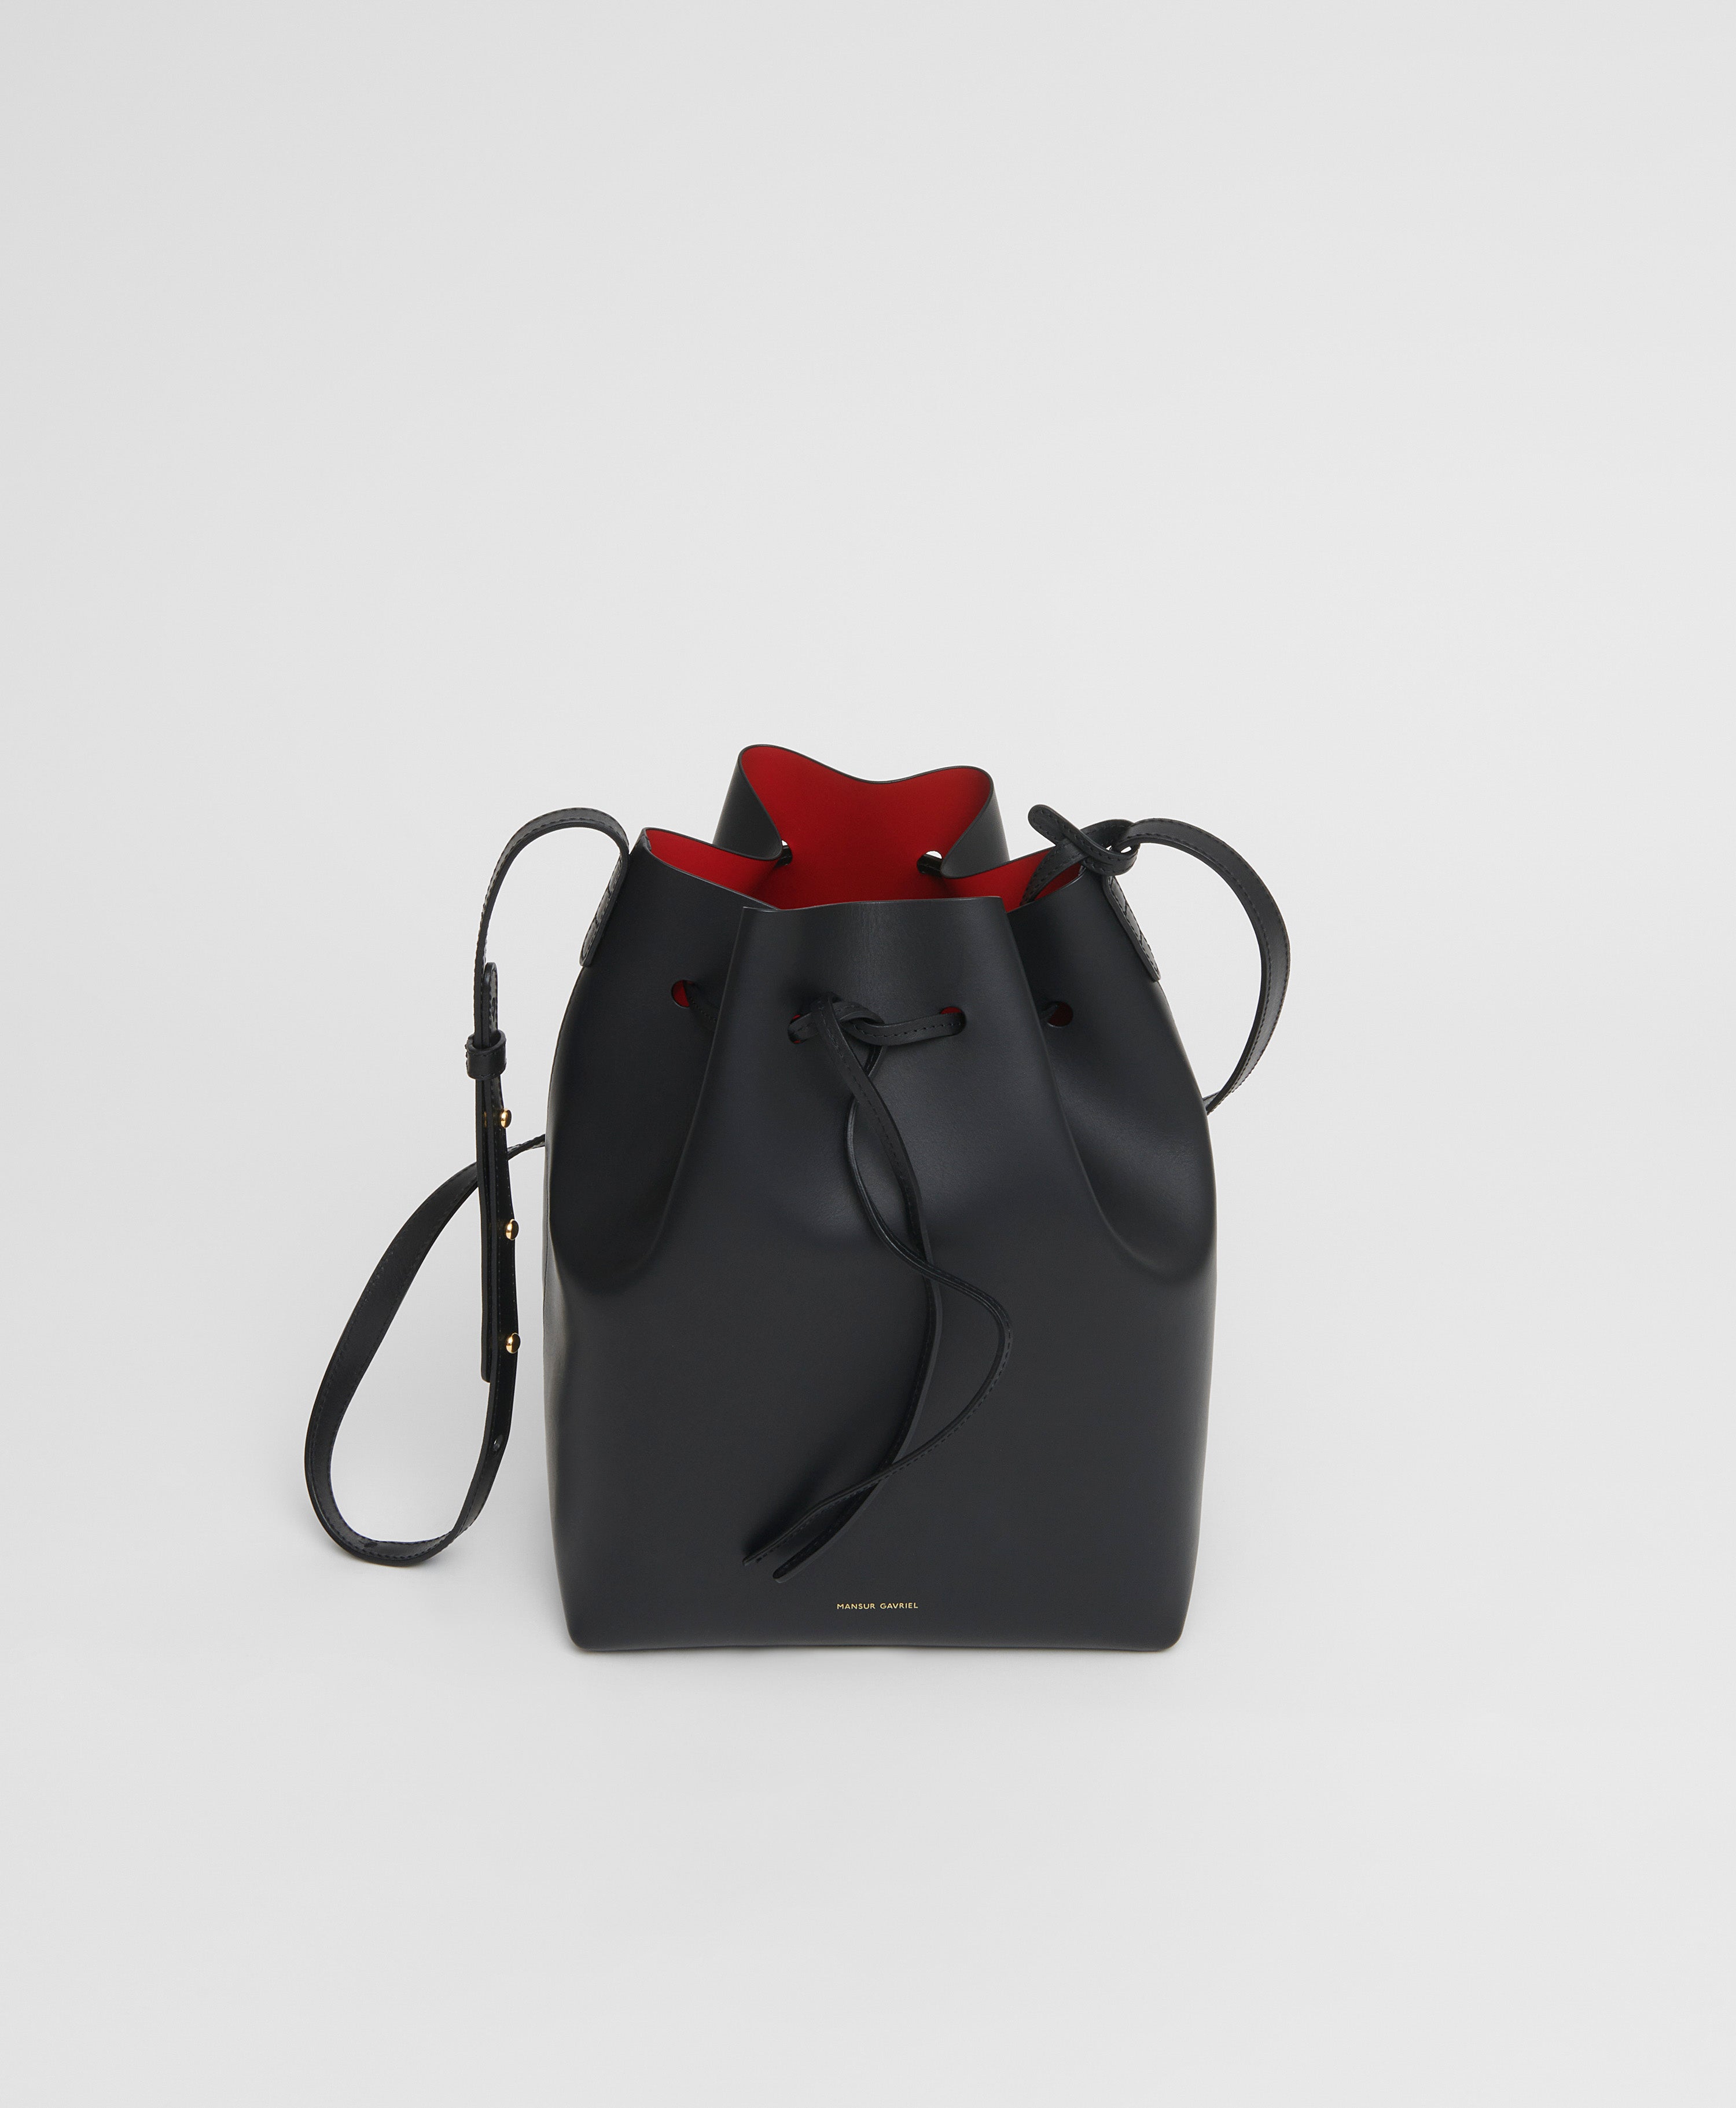 Mansur Gavriel Bucket Bag - The bag lust that would not die - My Women Stuff